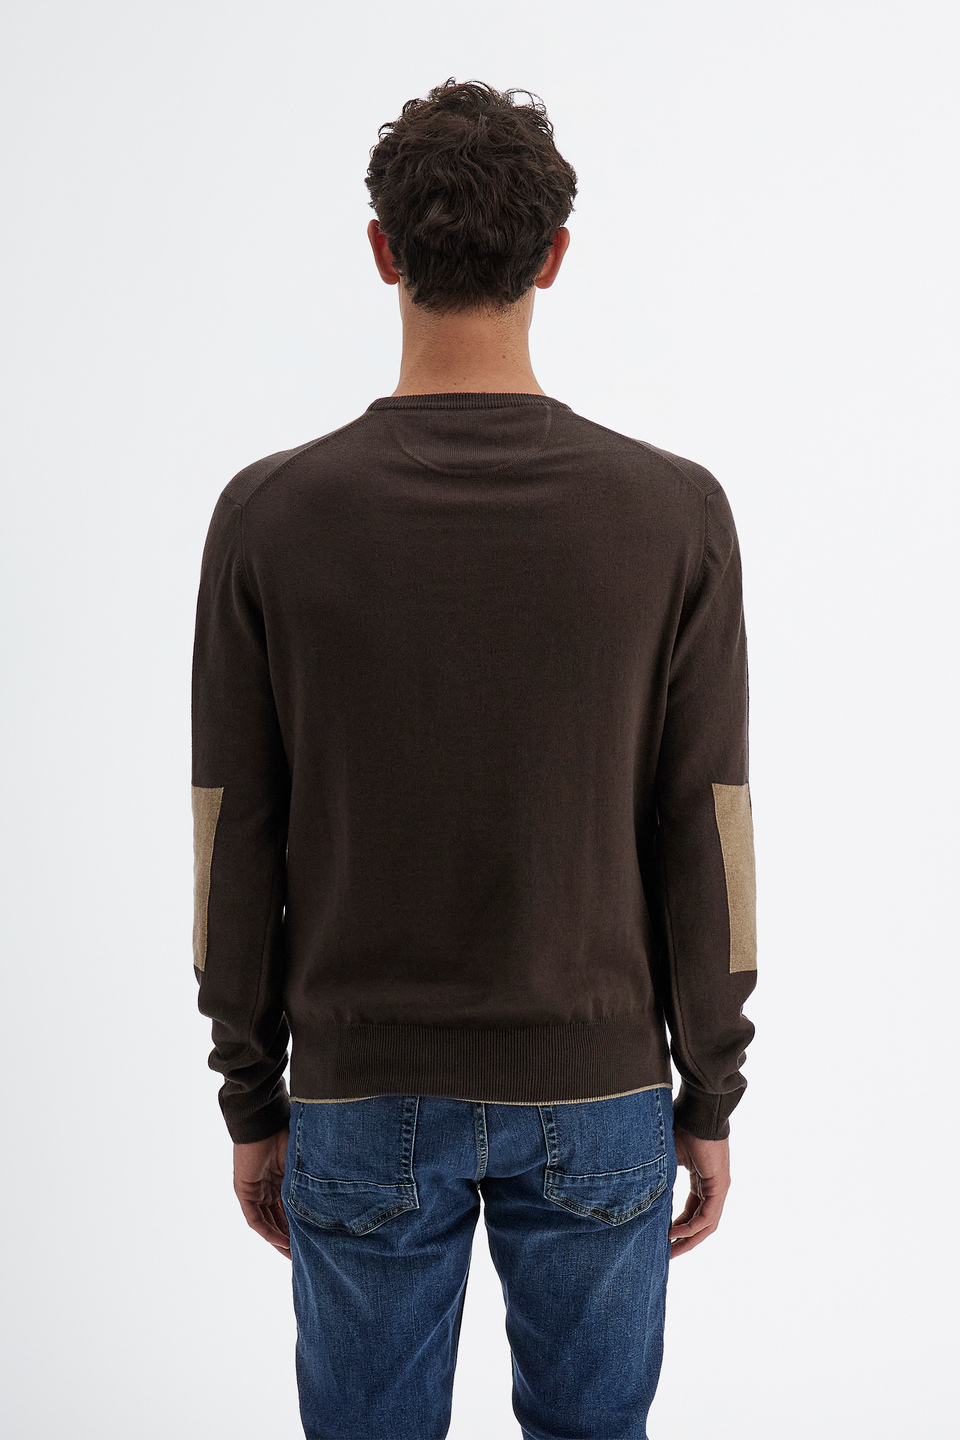 Jersey de punto de manga larga para hombre en mezcla de algodón corte regular con cuello redondo | La Martina - Official Online Shop